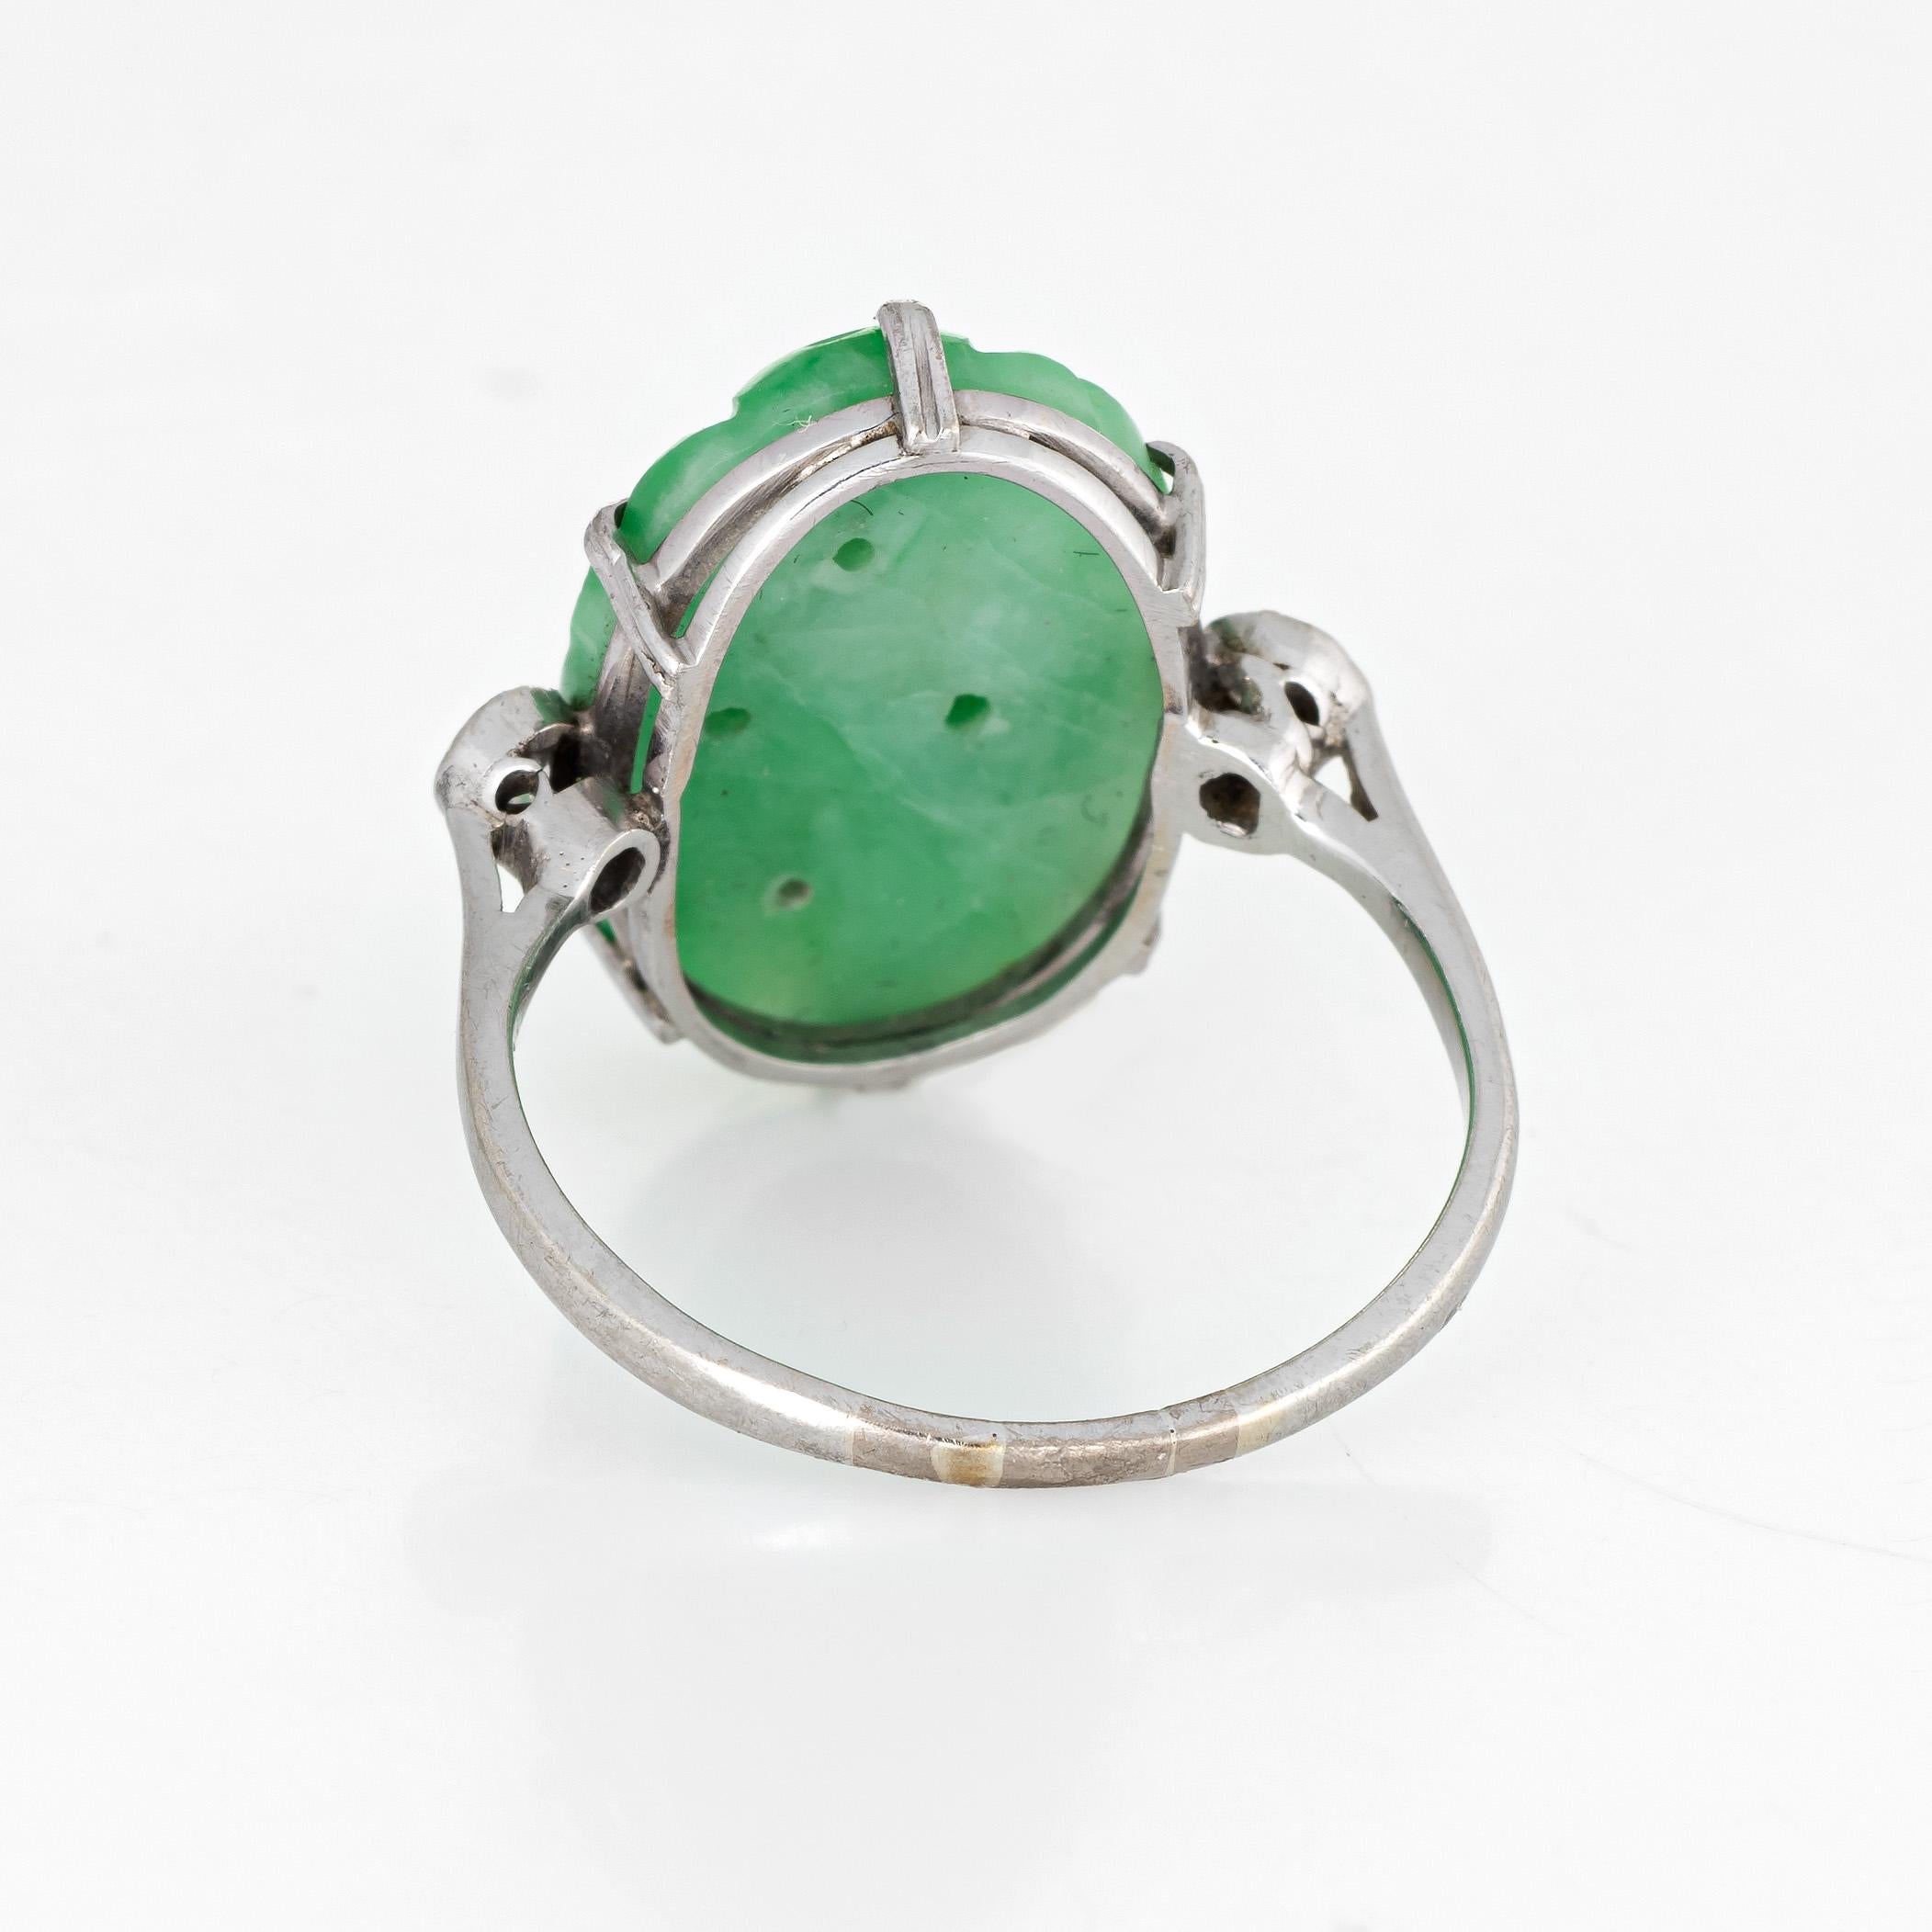 Oval Cut Vintage Carved Jade Diamond Ring 18 Karat White Gold Estate Fine Jewelry Green